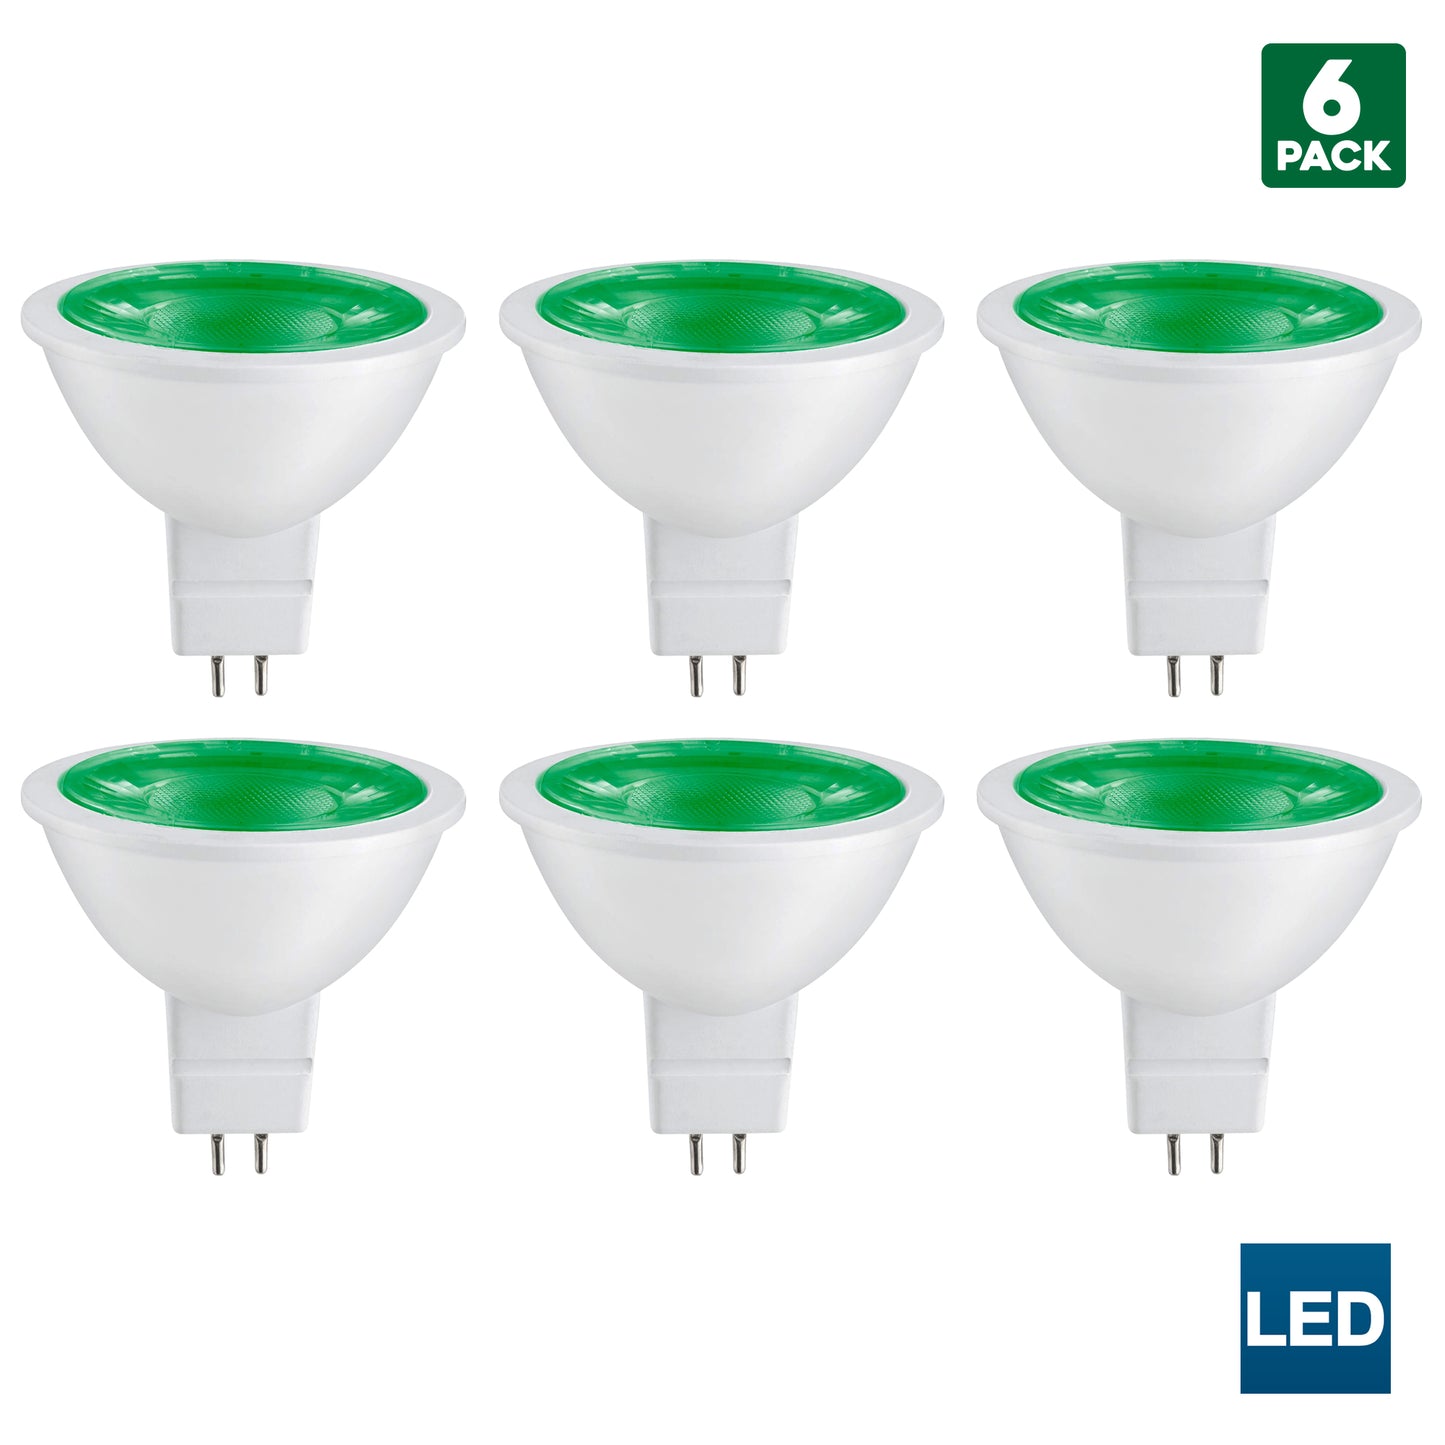 Sunlite MR16 Green LED Bulb, 12 Volt, 3 Watt, 90 Lumens, GU5.3 Base, 30,000 Hour Long Life, 25W Equivalent, Energy Saving, Cool Touch